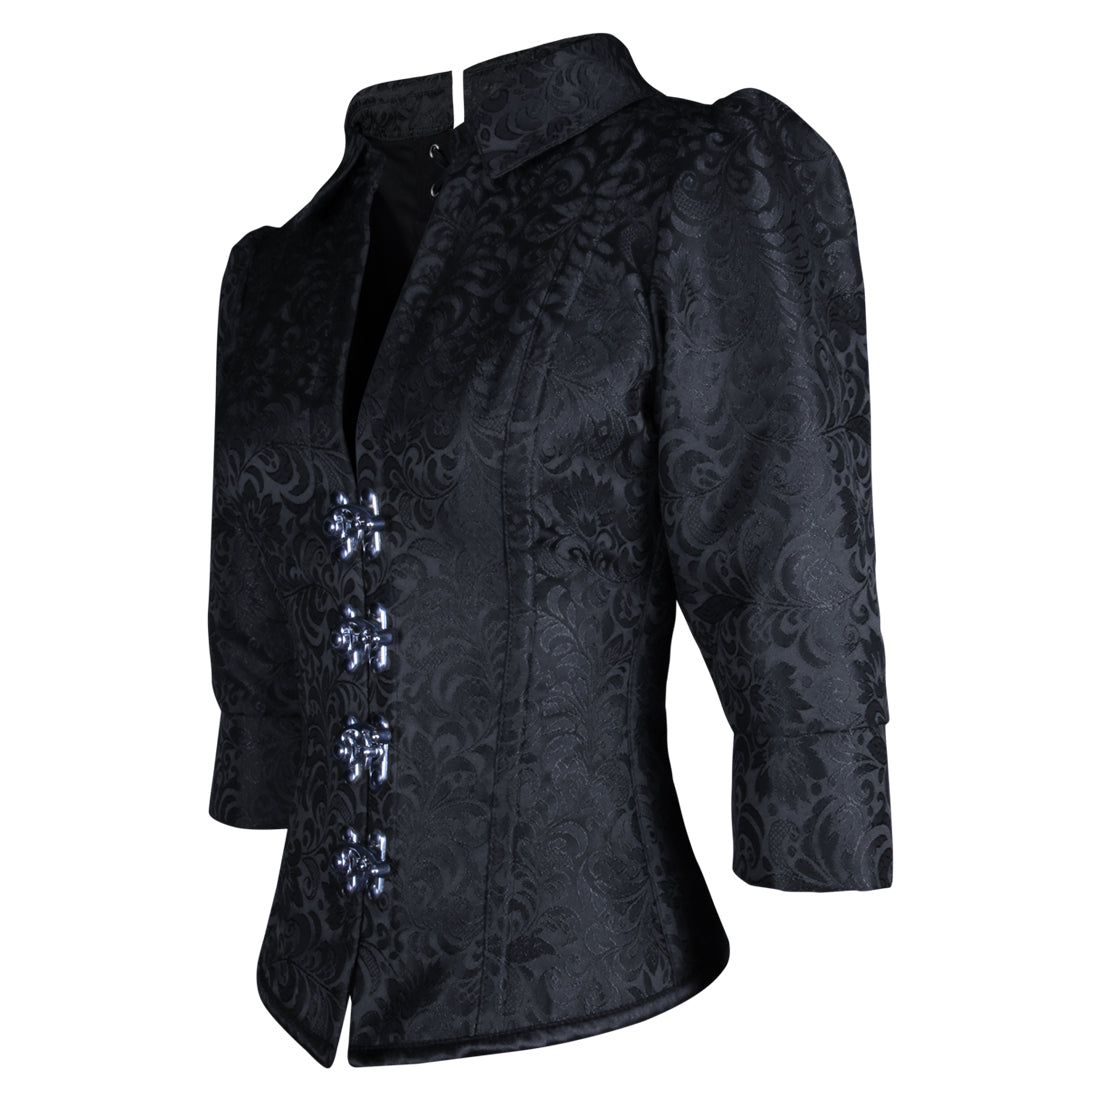 Black brocade corset shirt